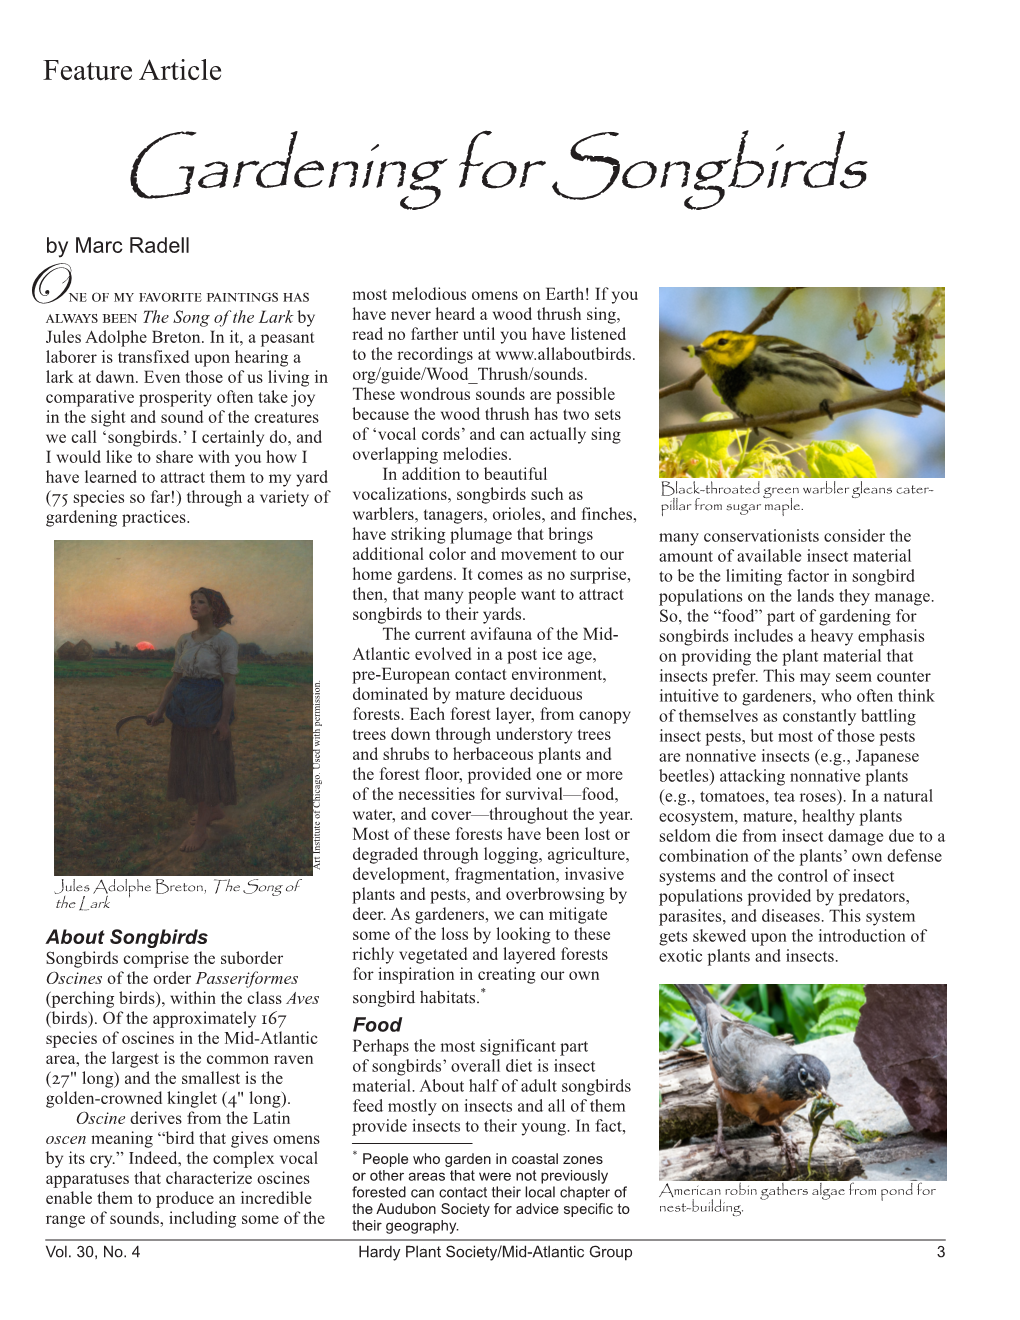 Gardening for Songbirds